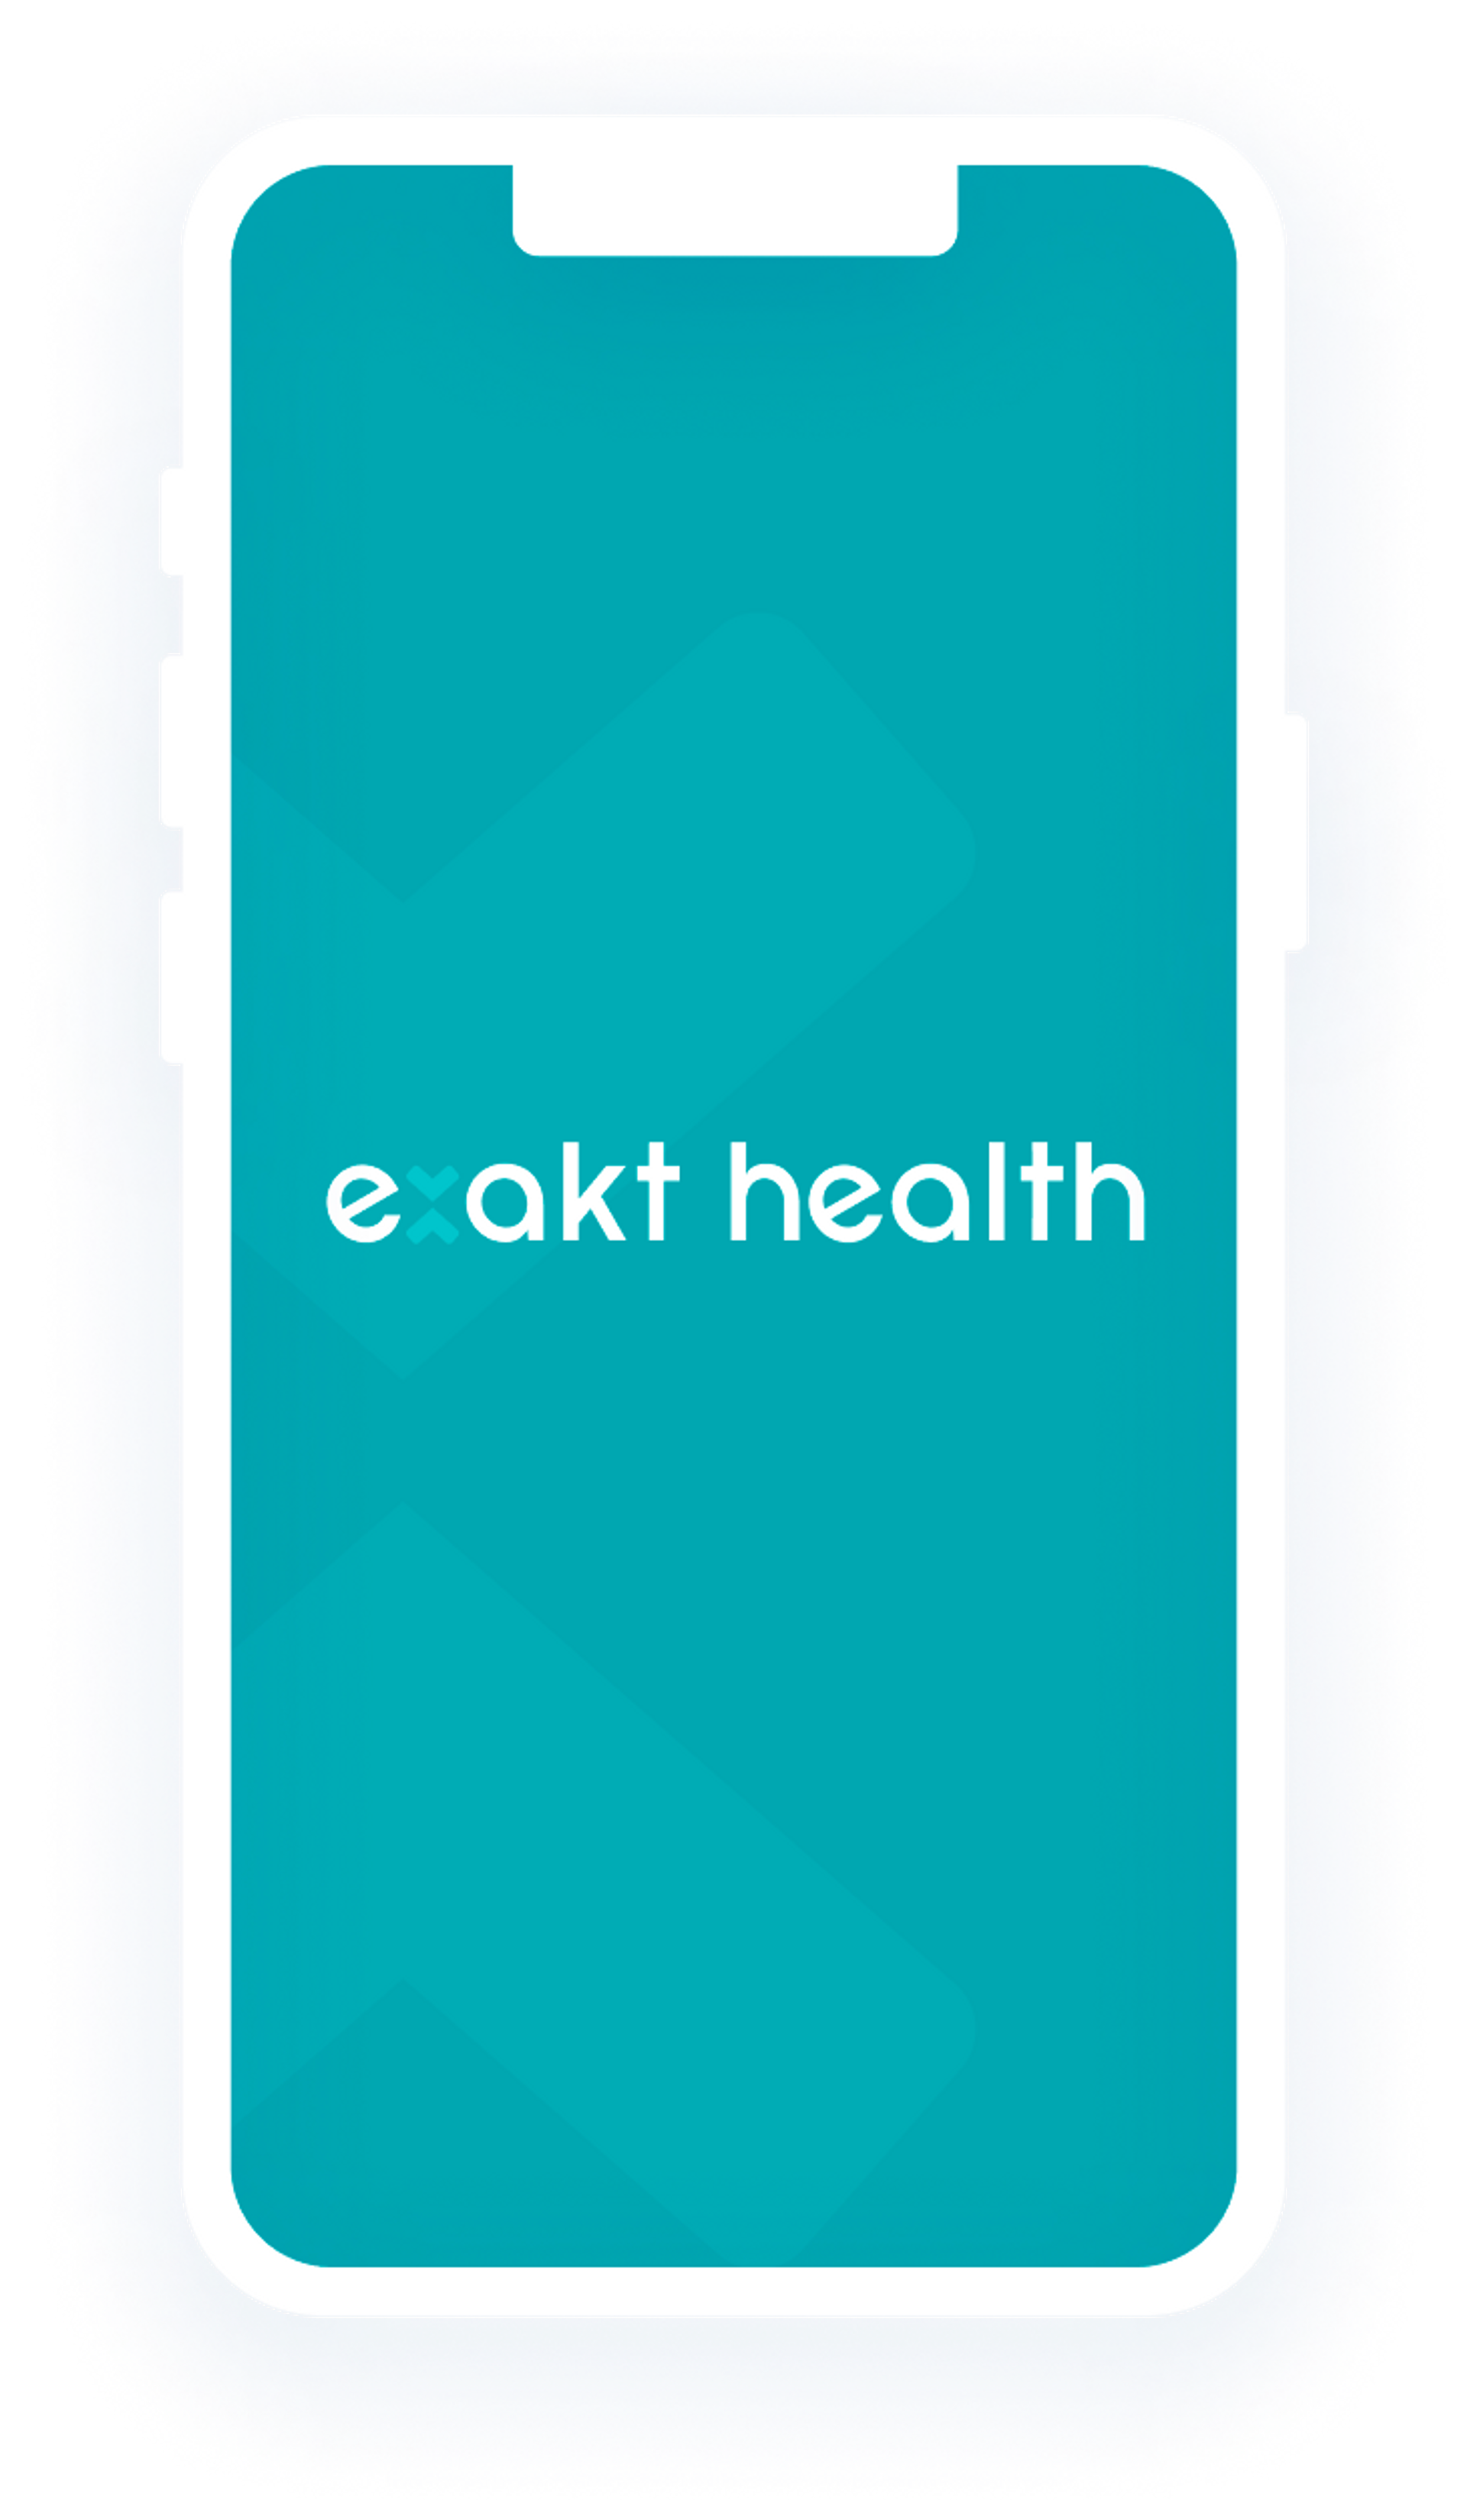 Exakt Health app splash screen